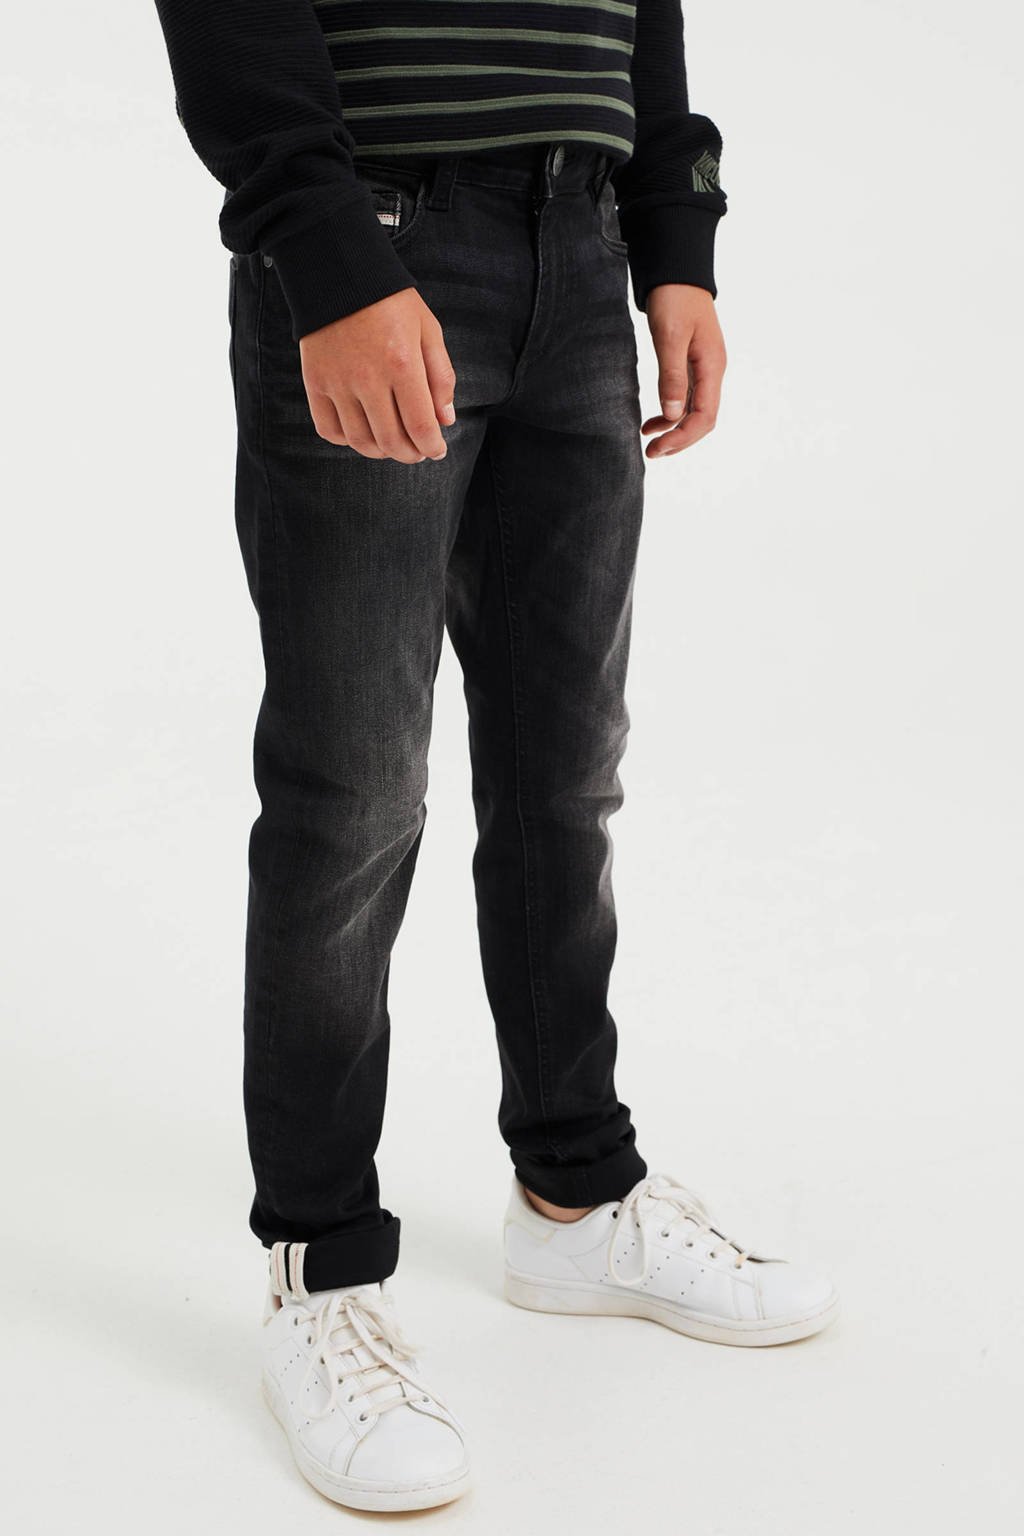 WE Fashion Blue Ridge slim fit jeans black faded